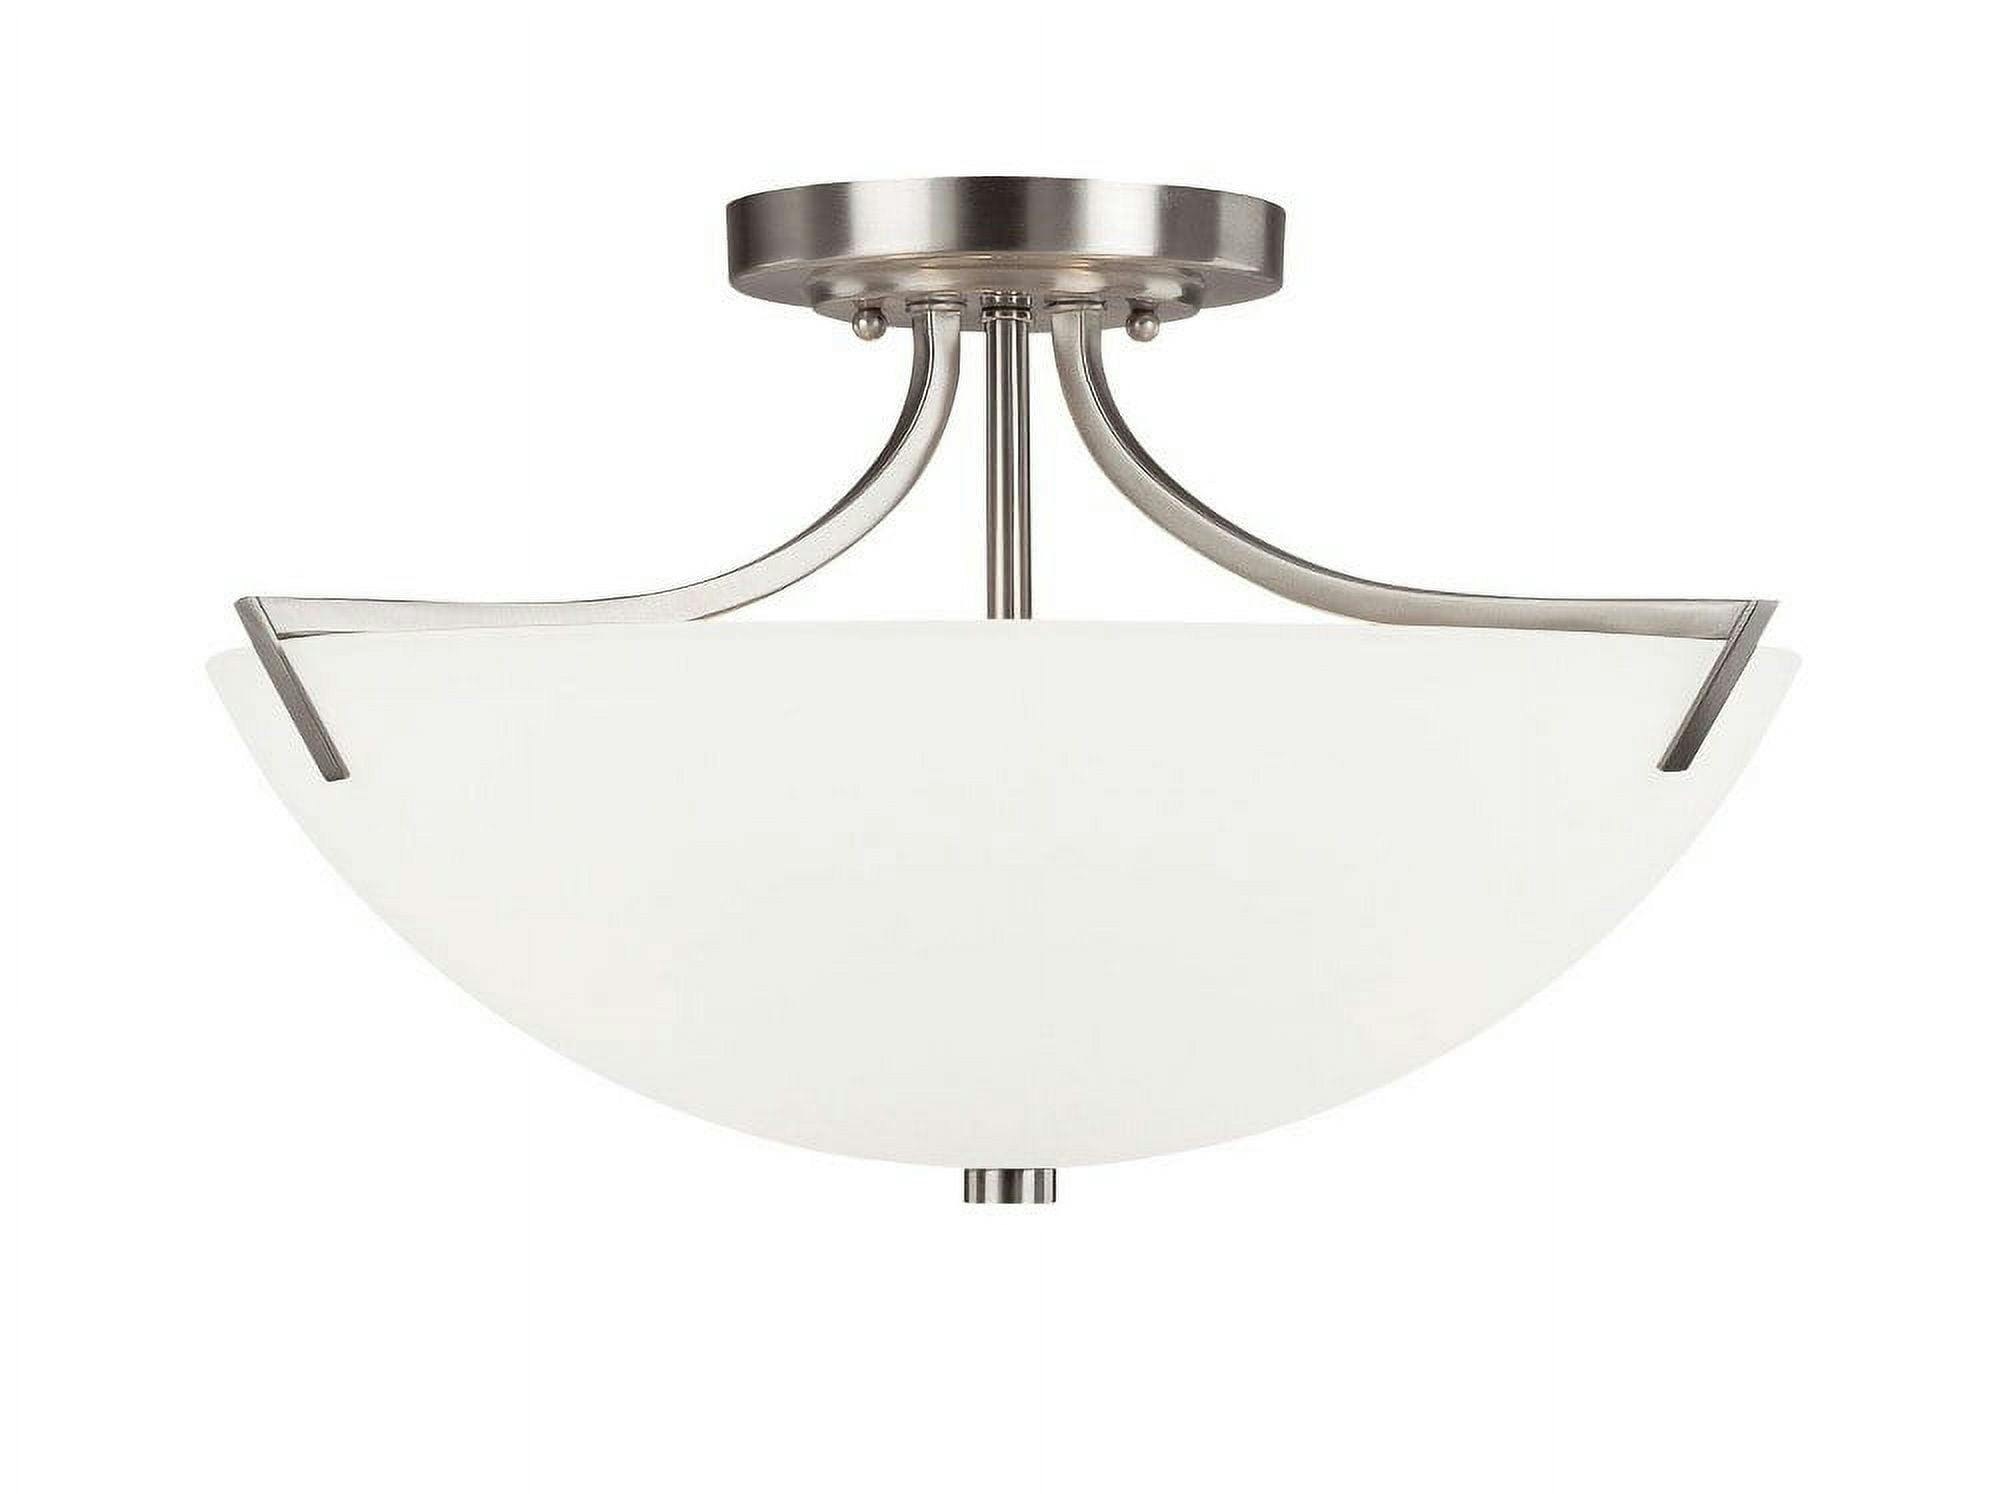 Stanton Soft White Glass Bowl 3-Light Semi-Flush Ceiling Fixture in Brushed Nickel